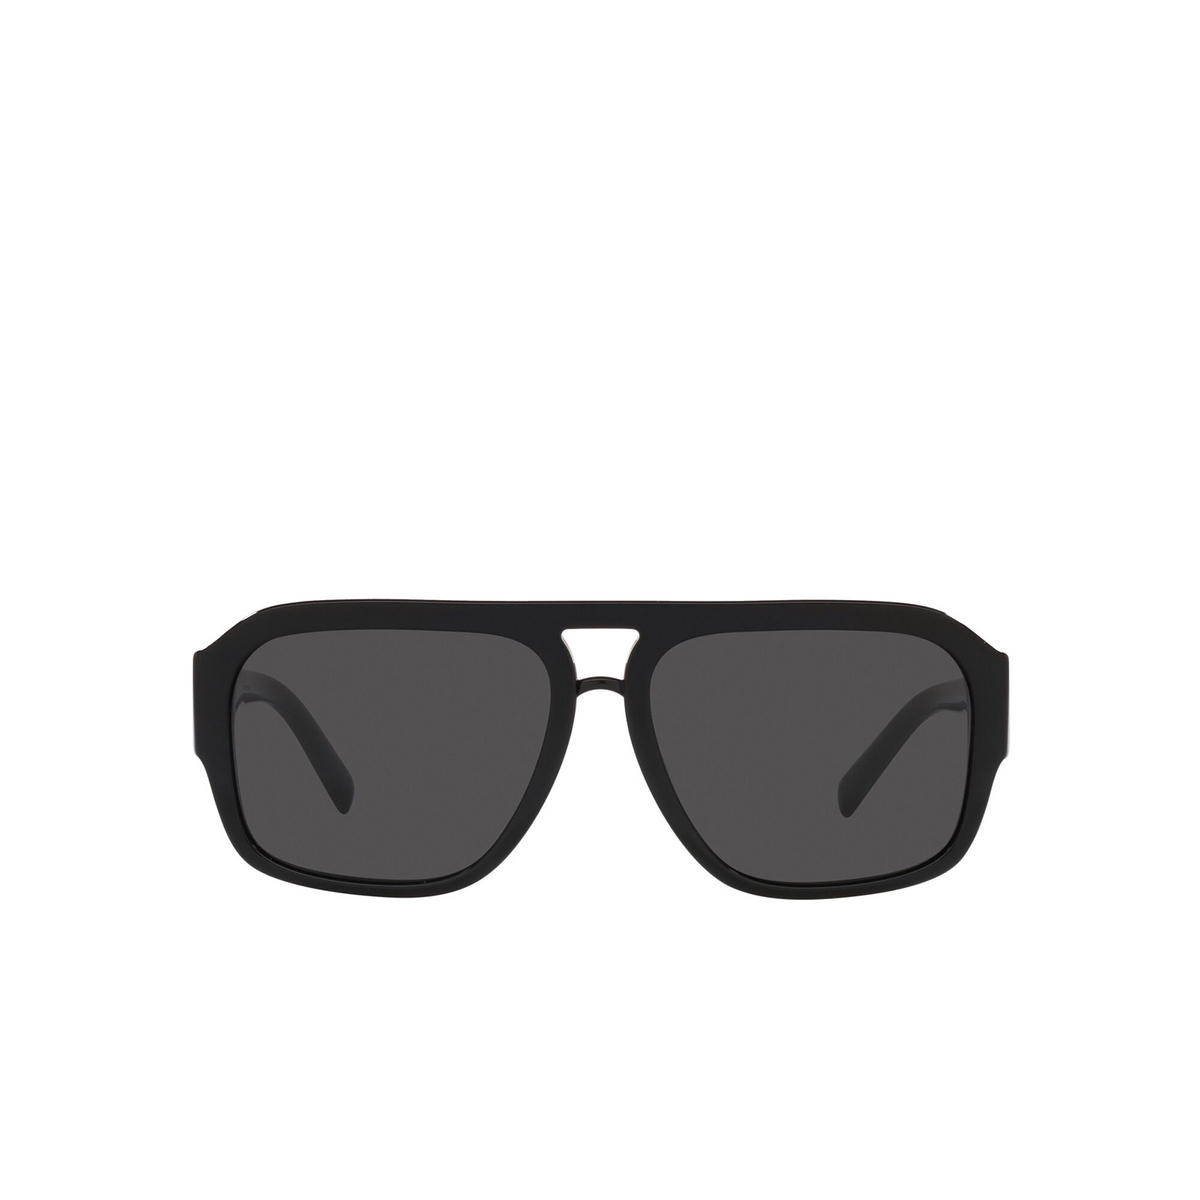 Dolce & Gabbana® Aviator Sunglasses: DG4403 color Black 501/87 - front view.